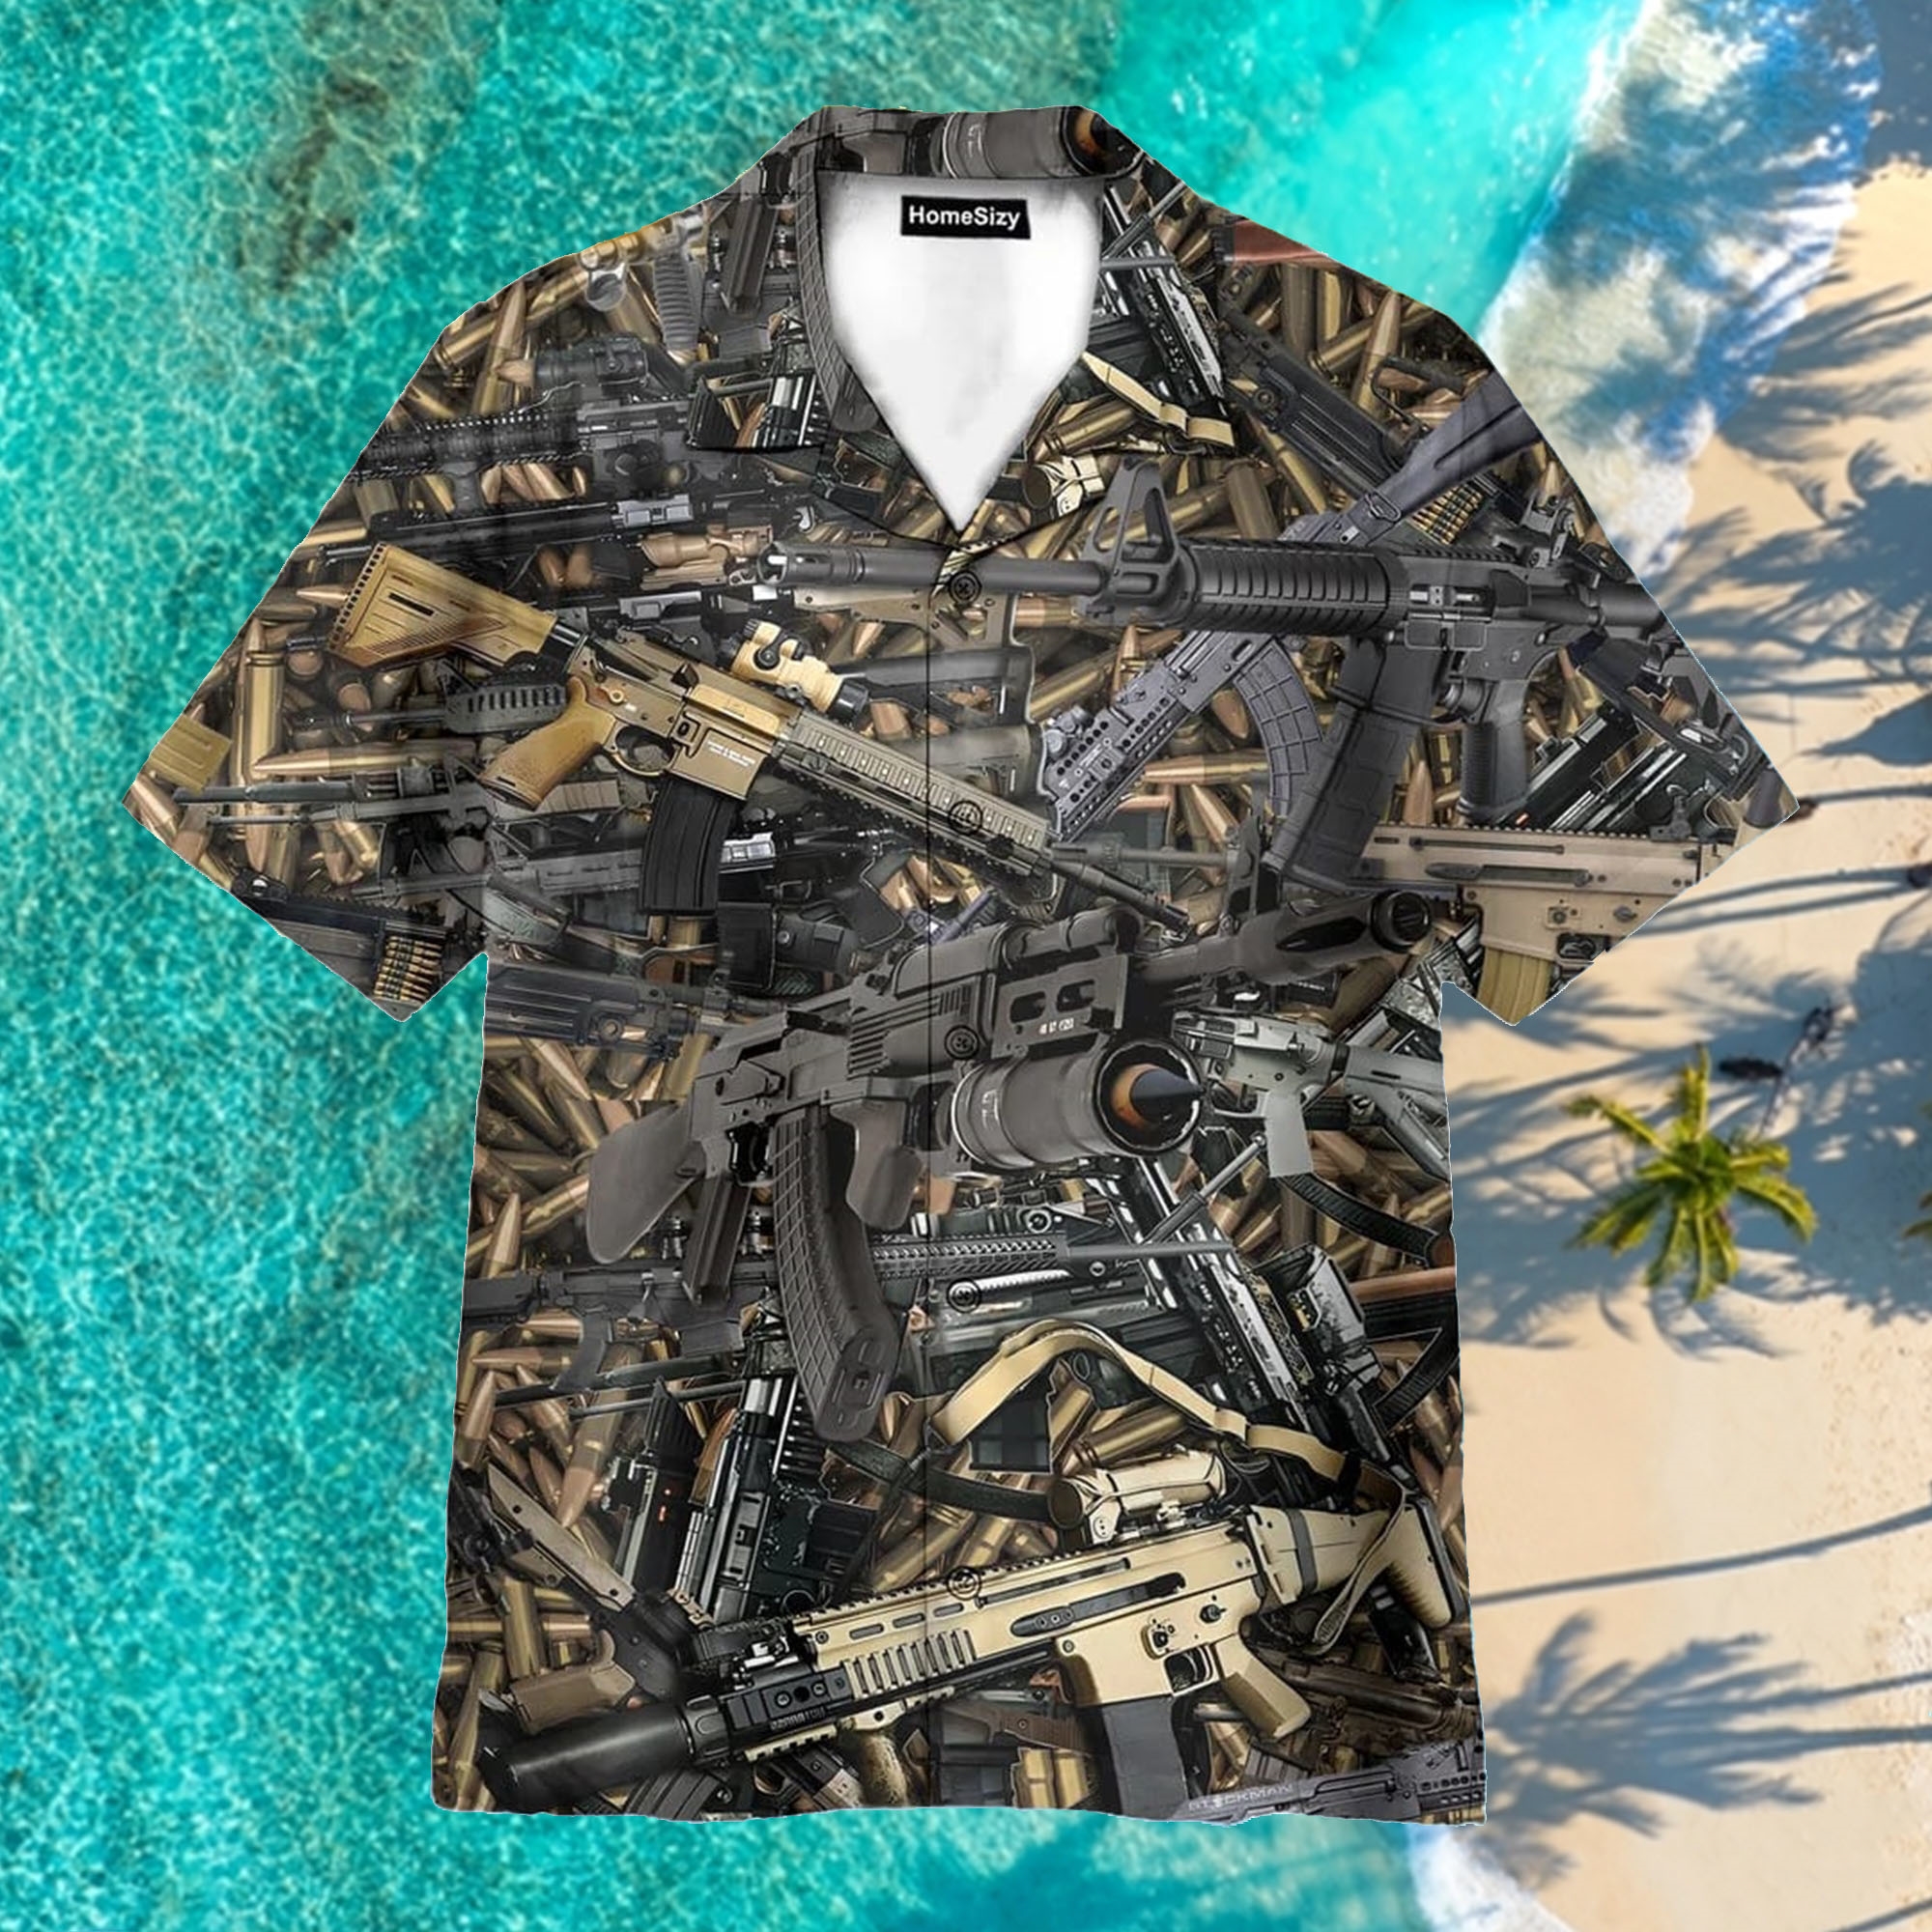 Tiki Head Tropical Leaves Pattern Aloha Hawaiian Shirt